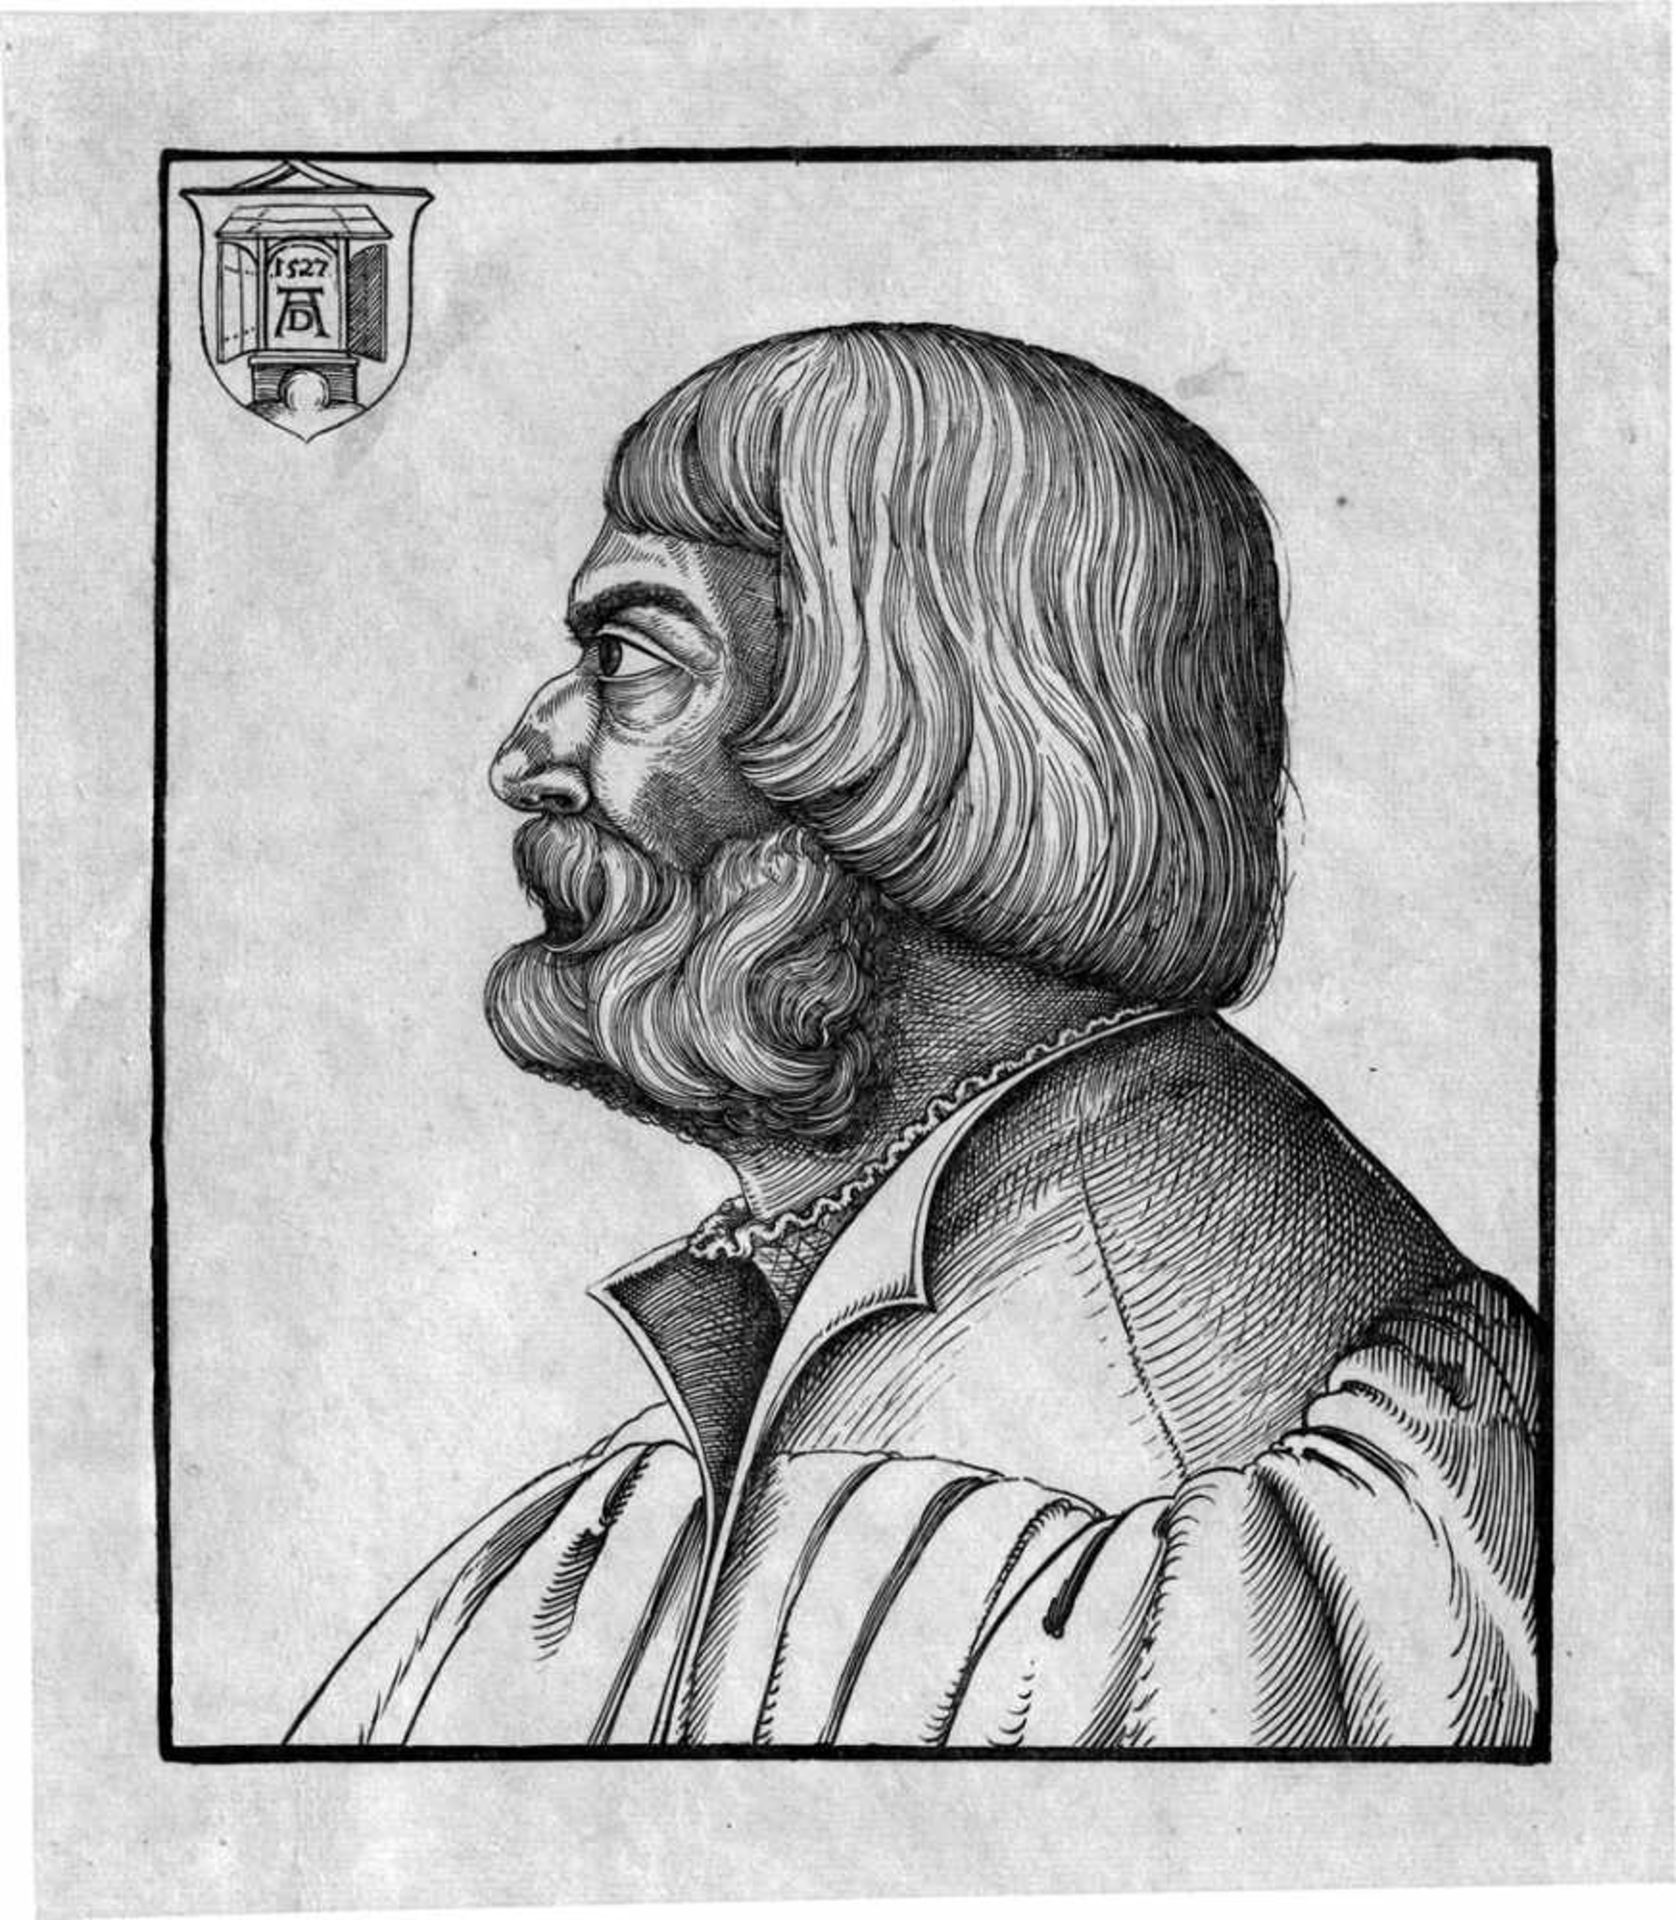 Schön, Erhard - Schule: Bildnis Albrecht Dürer im ProfilBildnis Albrecht Dürer im Profil.